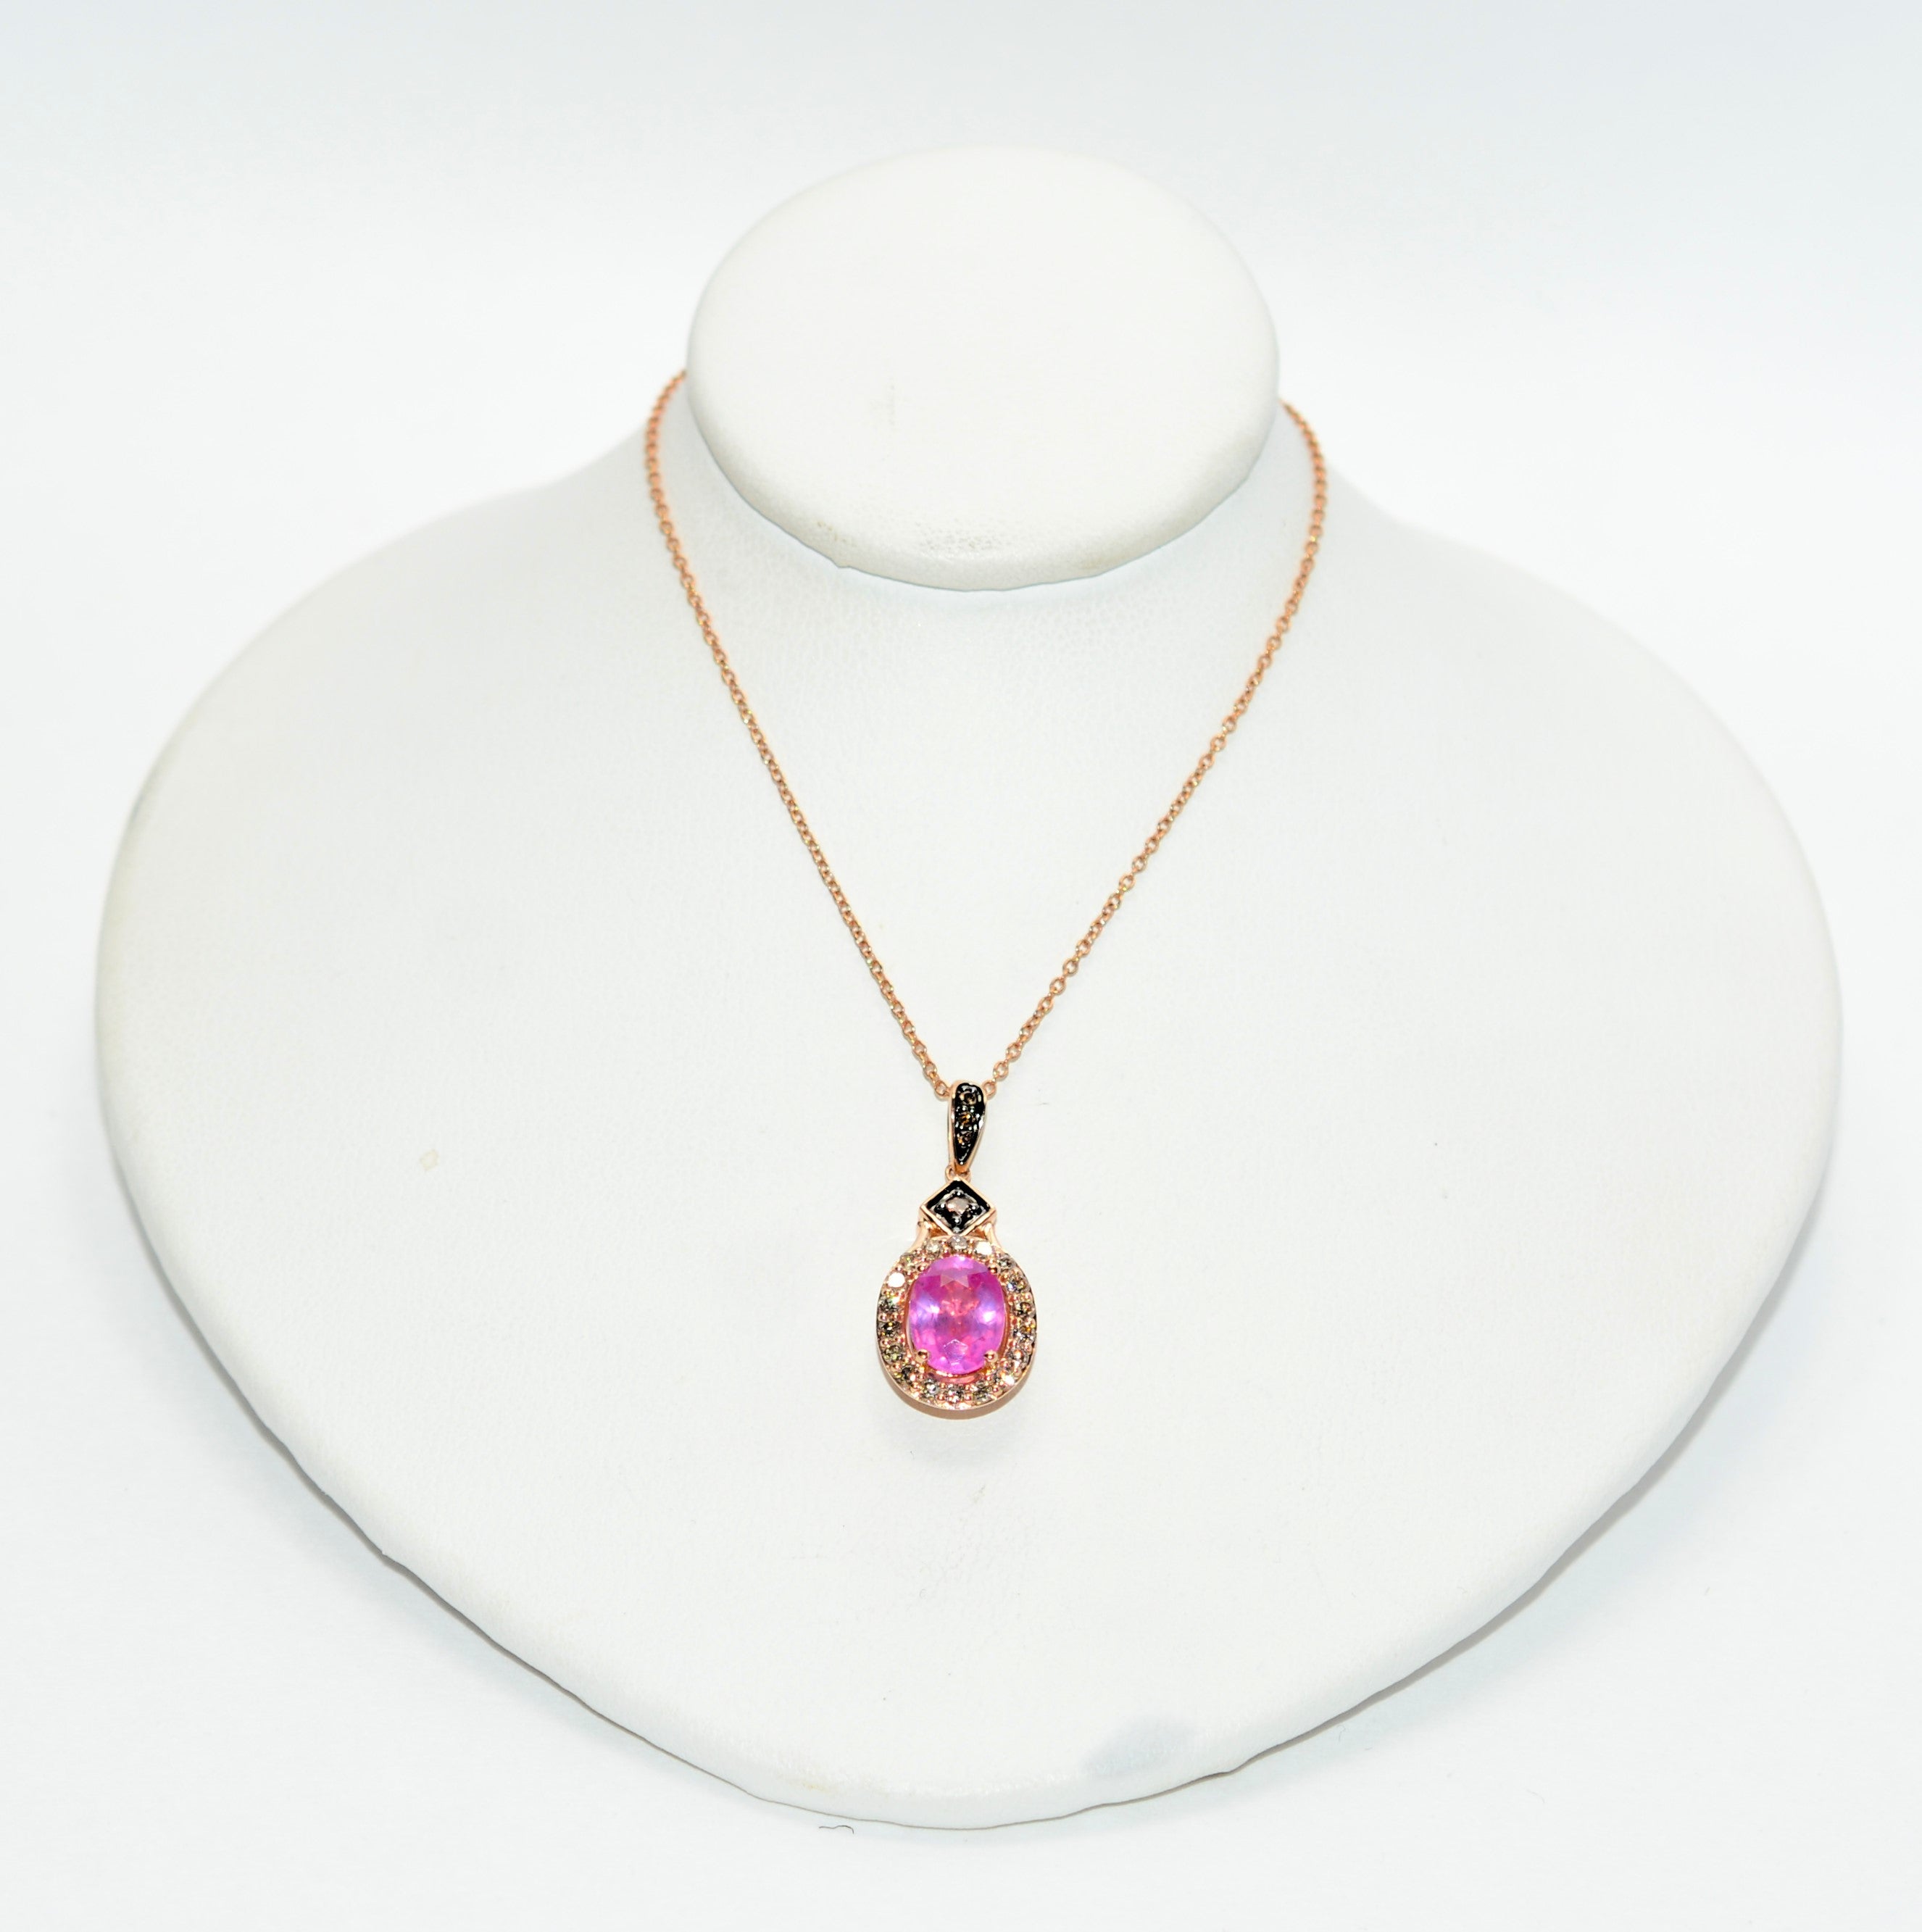 LeVian Natural Padparadscha Sapphire & Fancy Diamond Necklace 14K Rose Gold 1.89tcw Pink Sapphire Designer Gemstone Statement Necklace Jewel